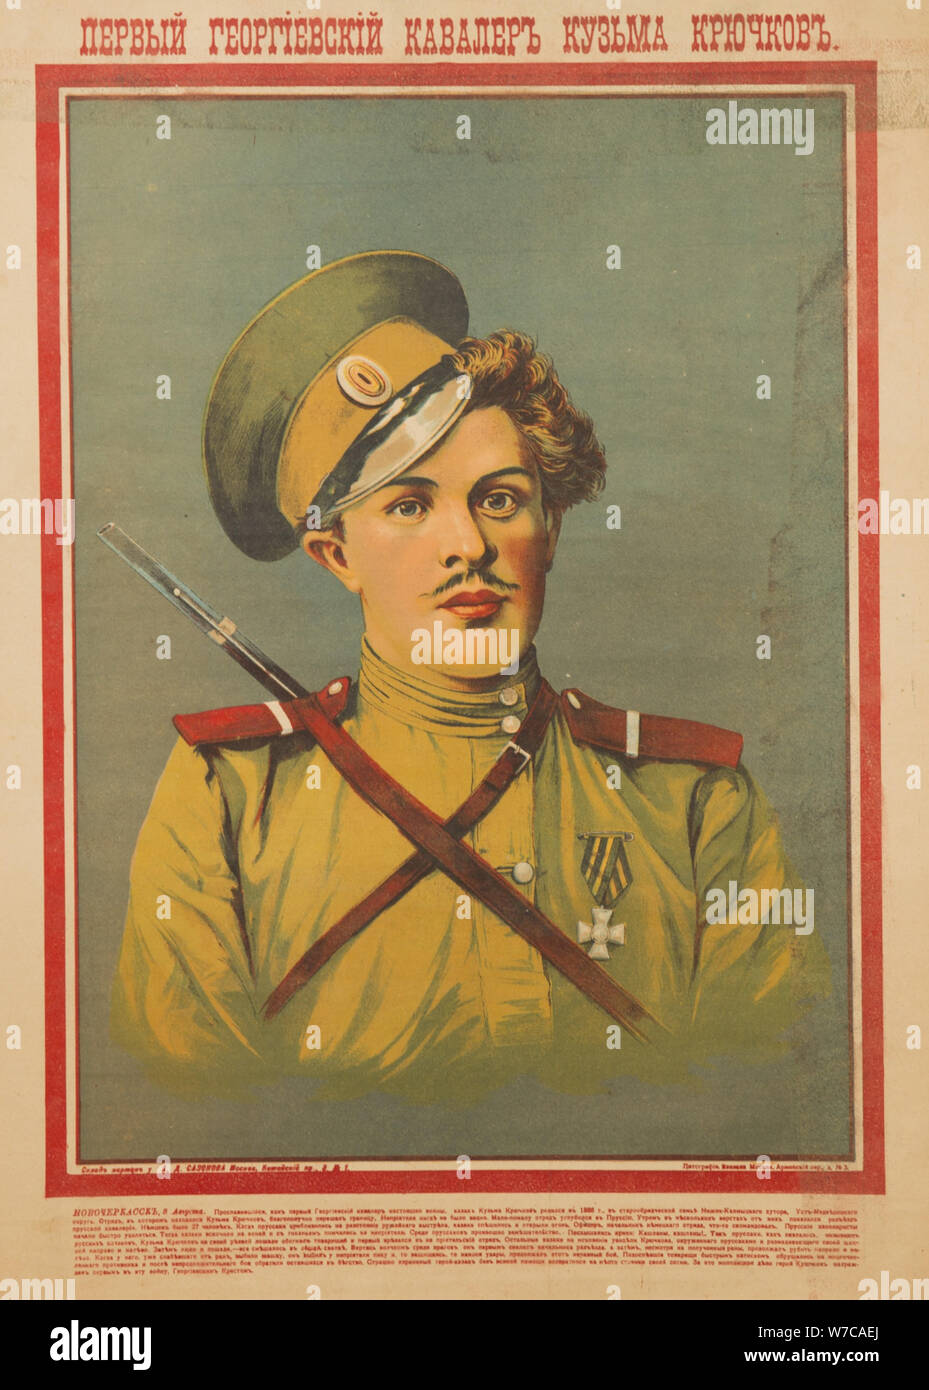 The Hero Kuzma Kryuchkov, 1915. Artist: Anonymous Stock Photo